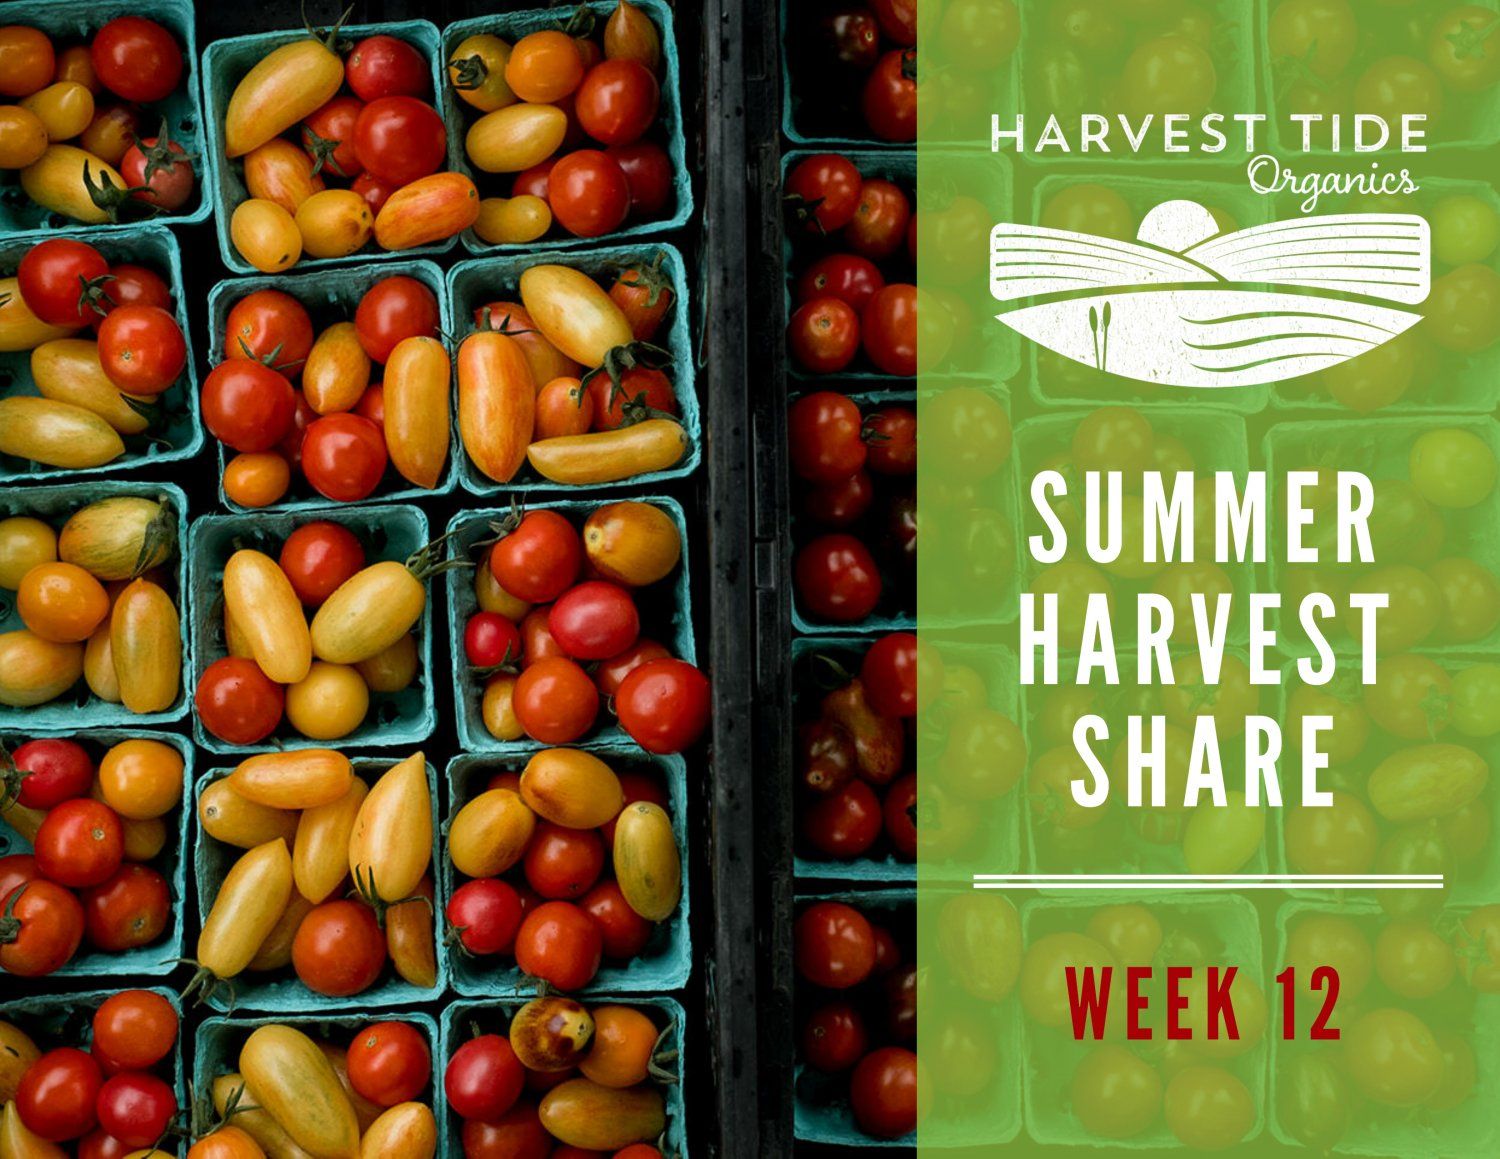 Previous Happening: Summer Harvest Share - Week 12